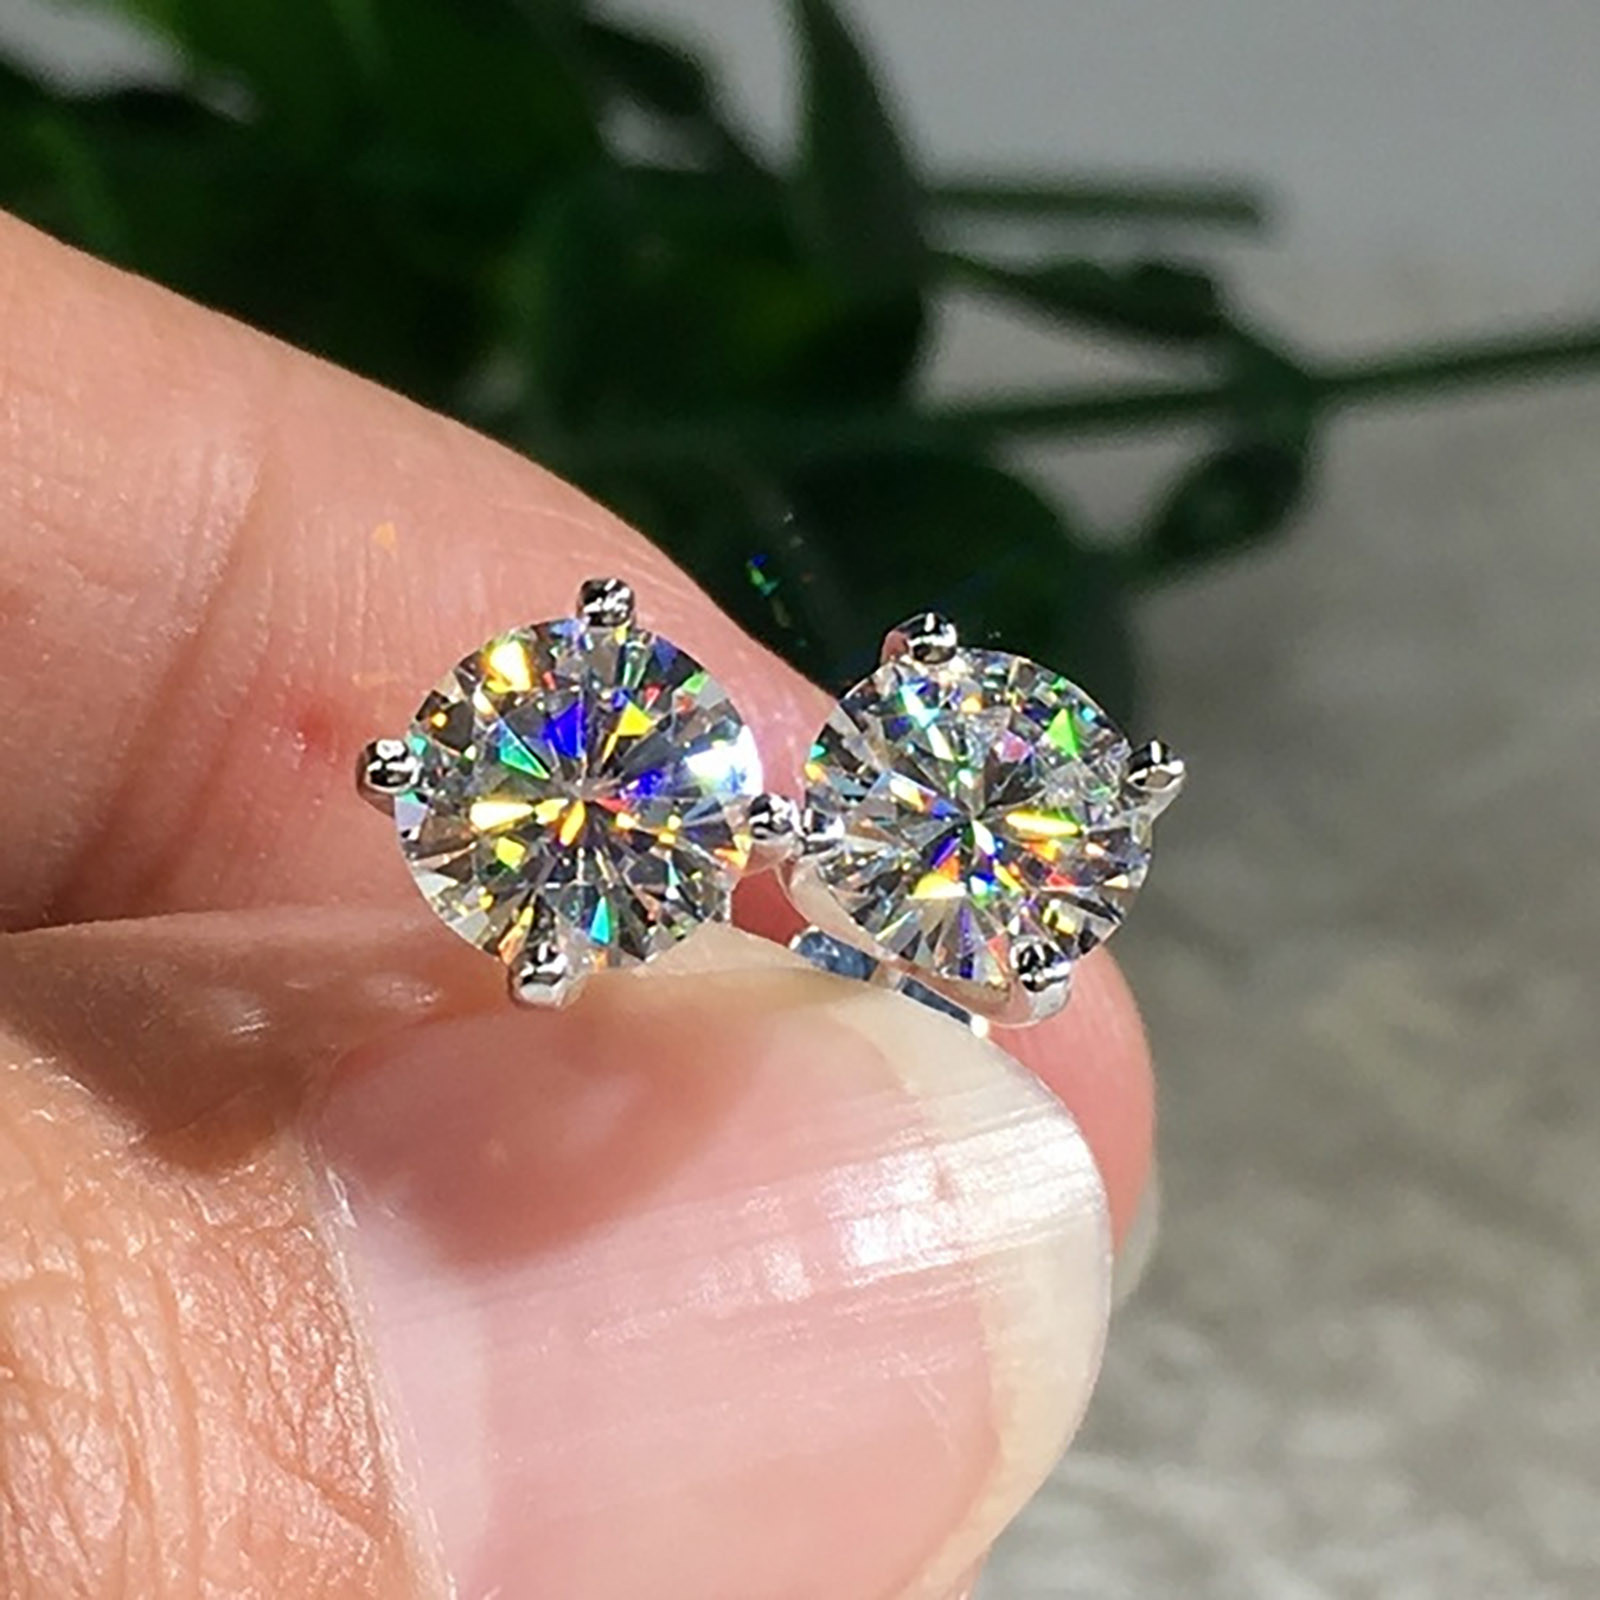 Four Crystal Diamond Stud Earrings For Teen Girls Minimalist Piercing ...